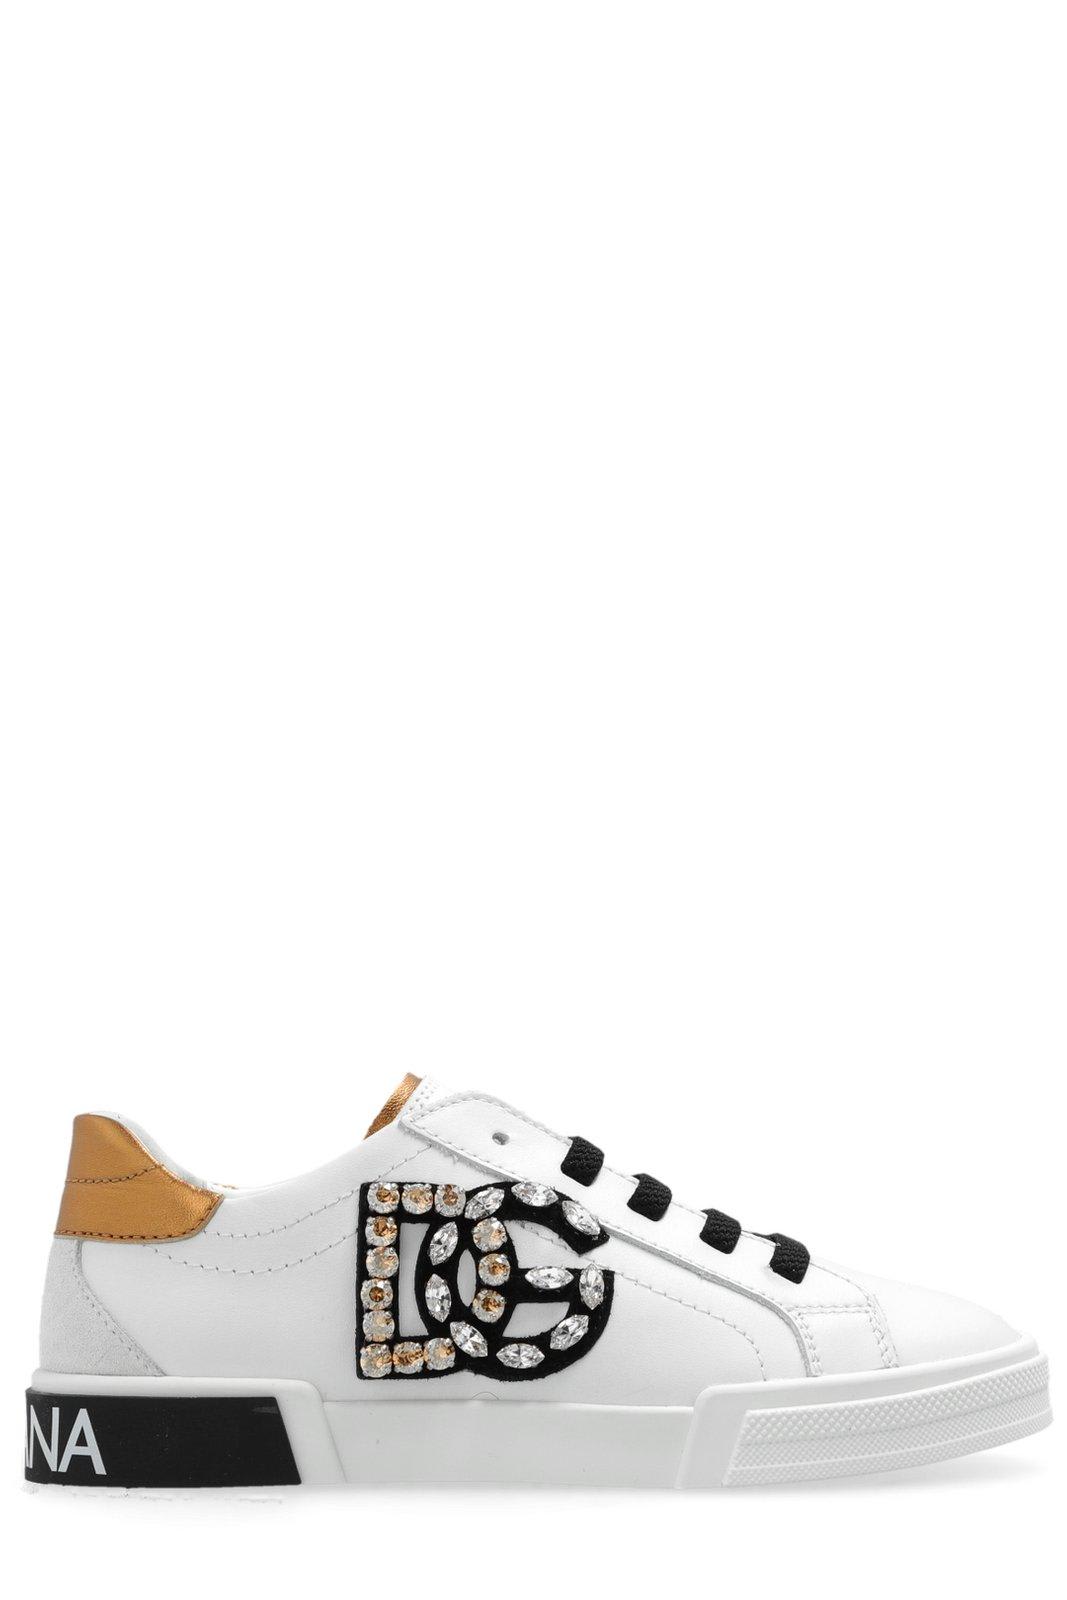 Dolce & Gabbana Portofino Vintage Sneakers